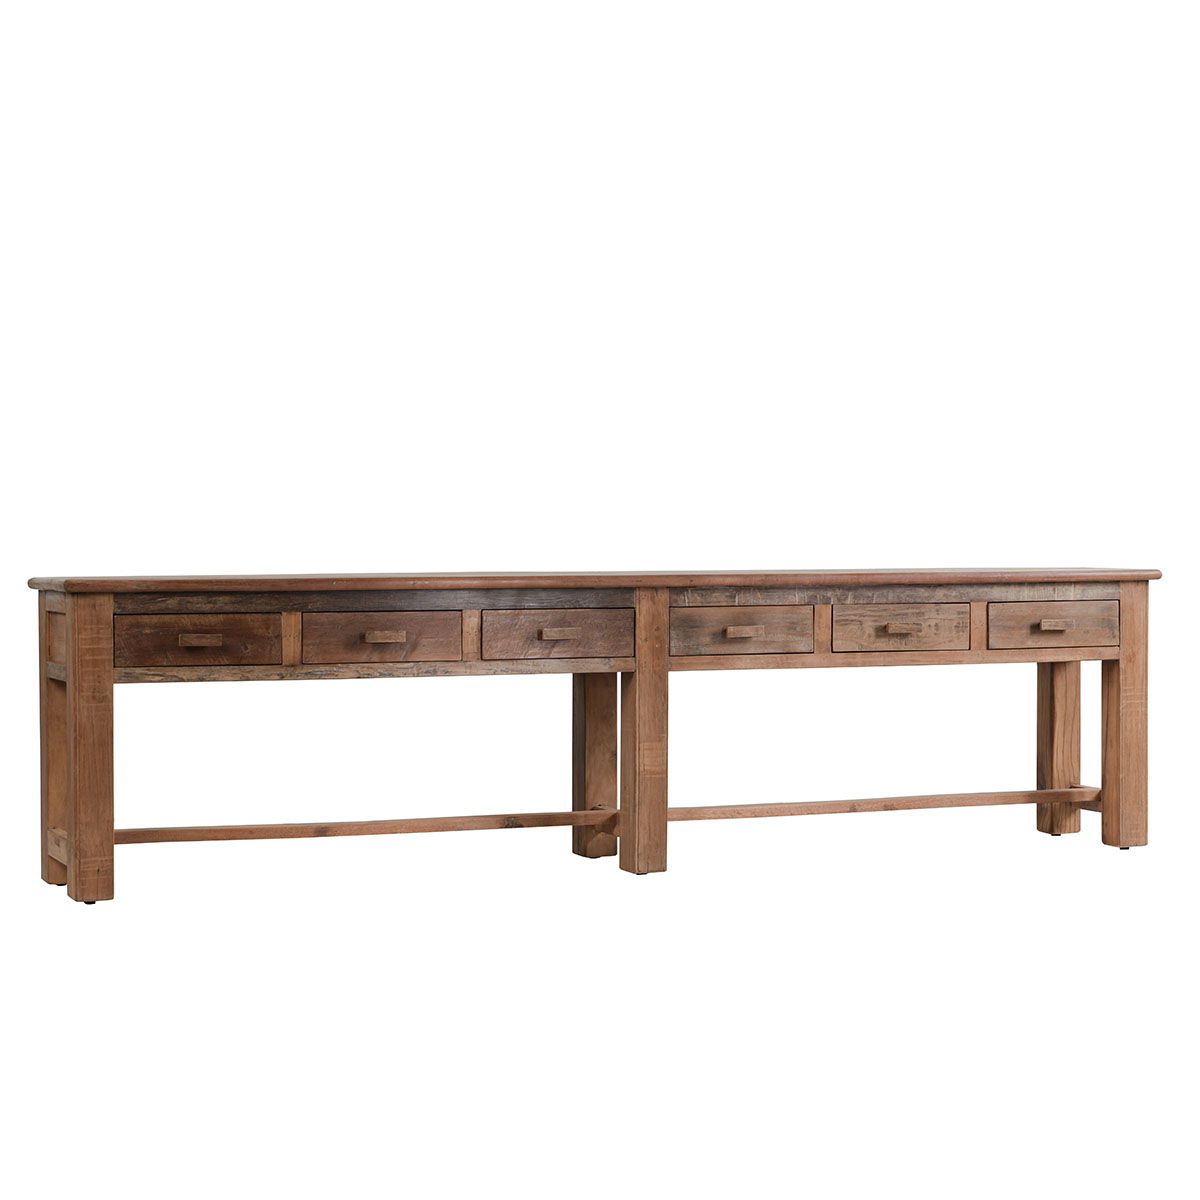 Ezra - Reclaimed Wood Console Table